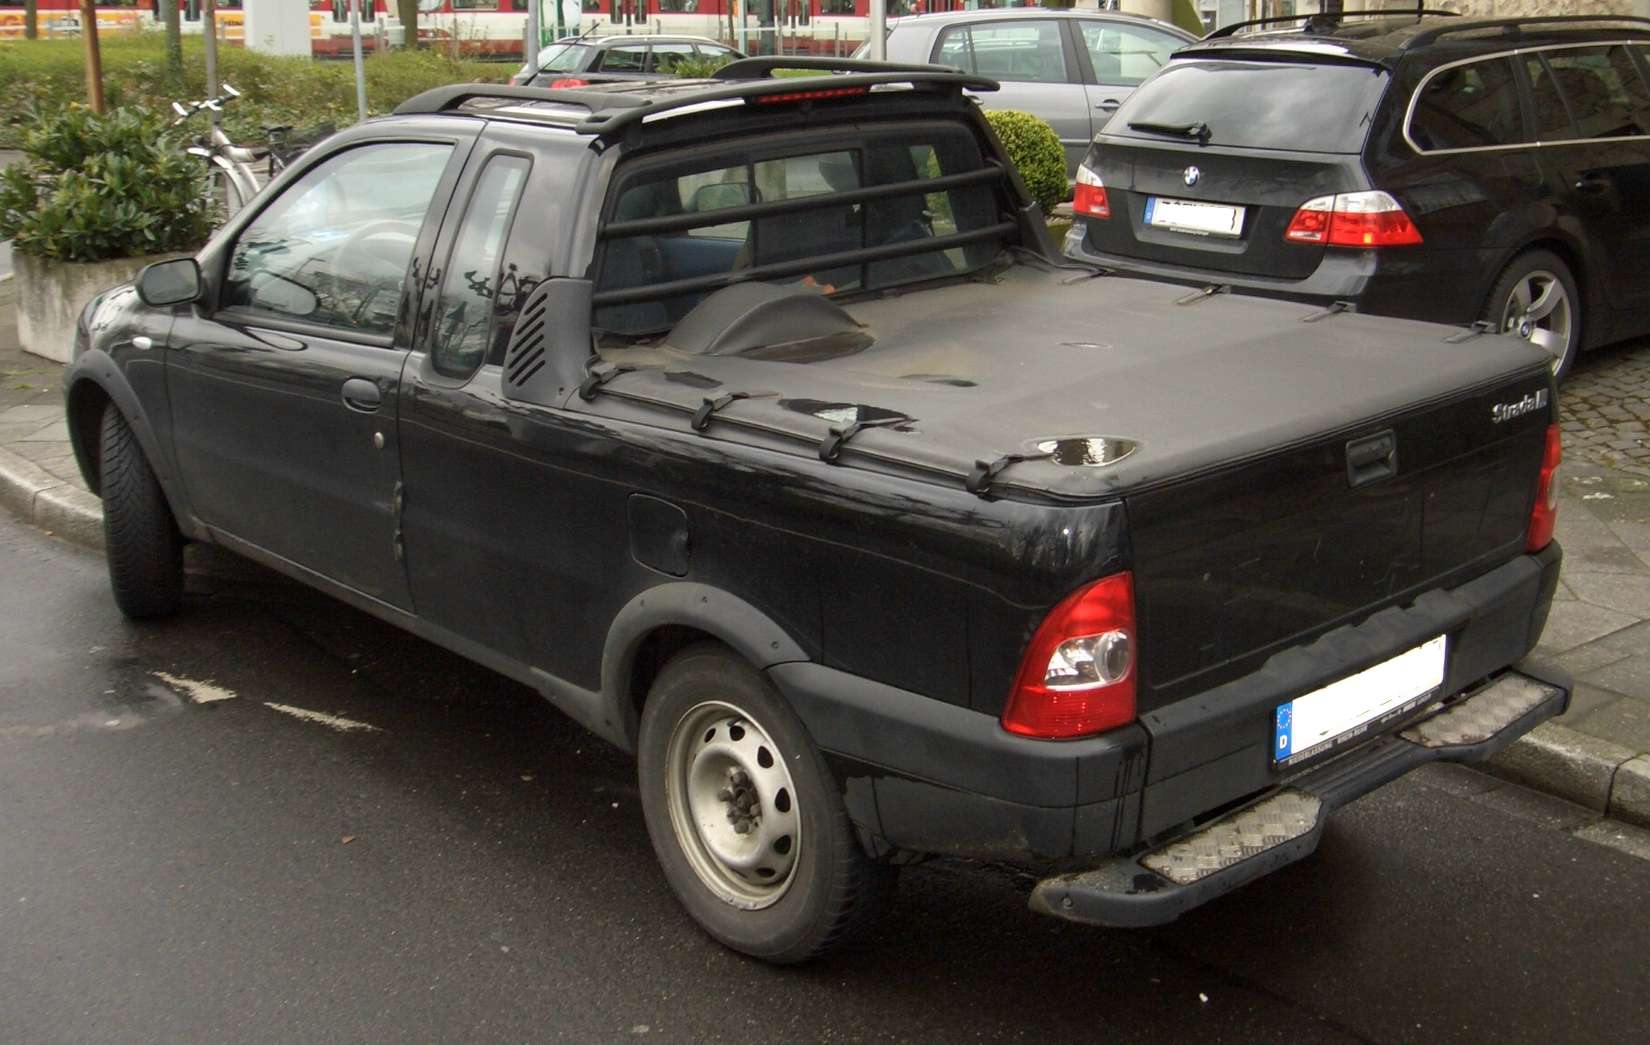 Fiat Pick-up